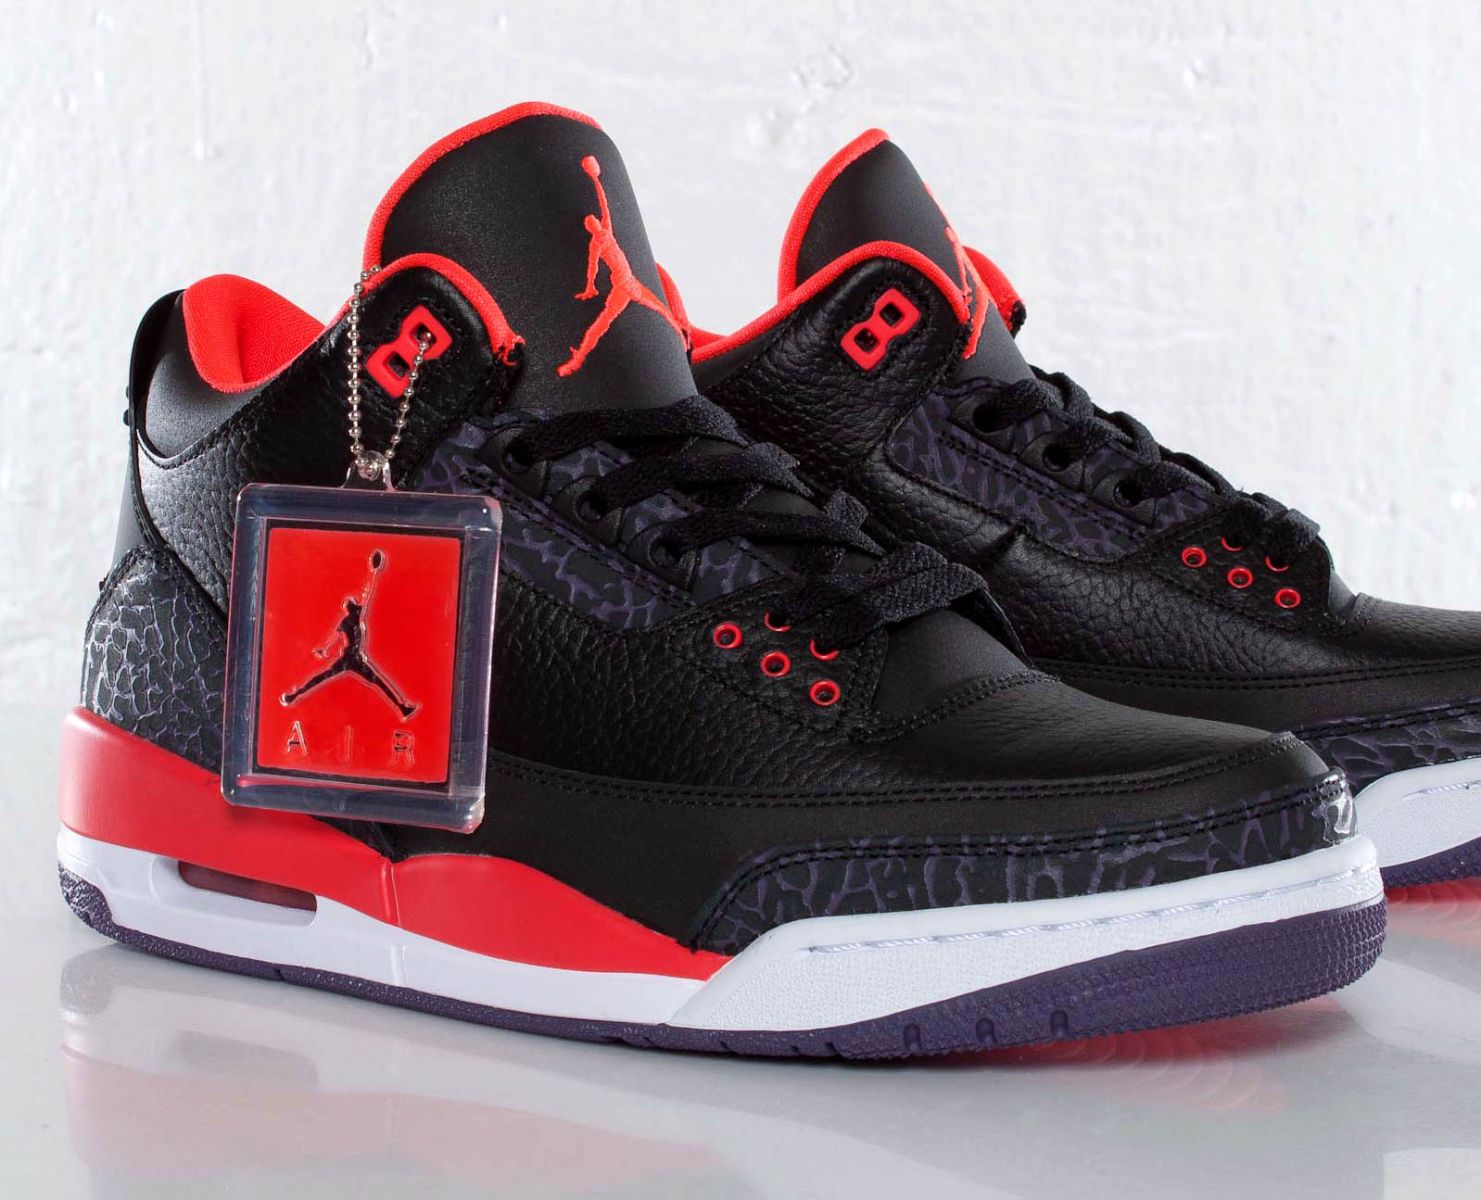 Air Jordan 3 Retro "Bright Crimson" - New Images and Release Reminder